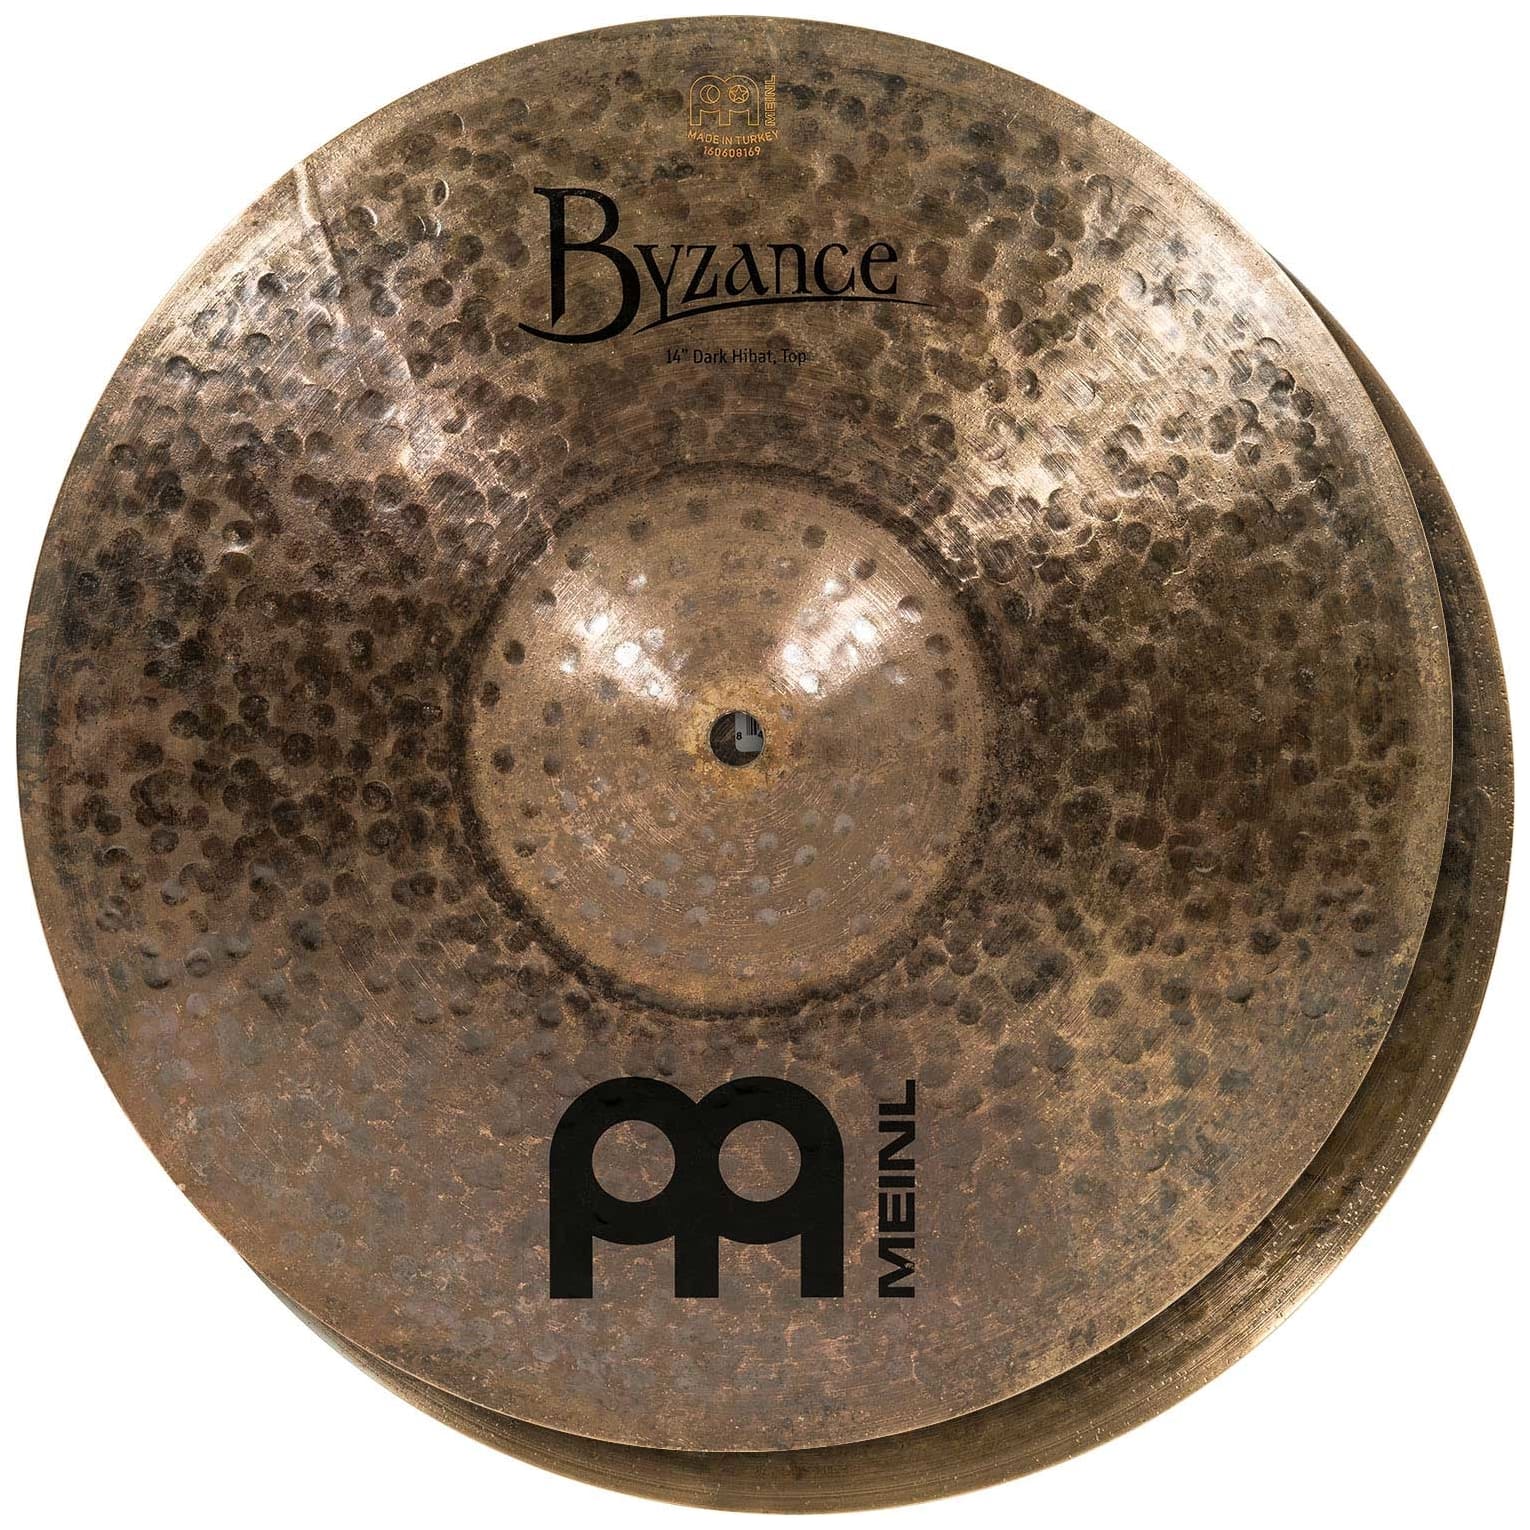 Meinl Cymbals B14DAH - 14" Byzance Dark Hihat 